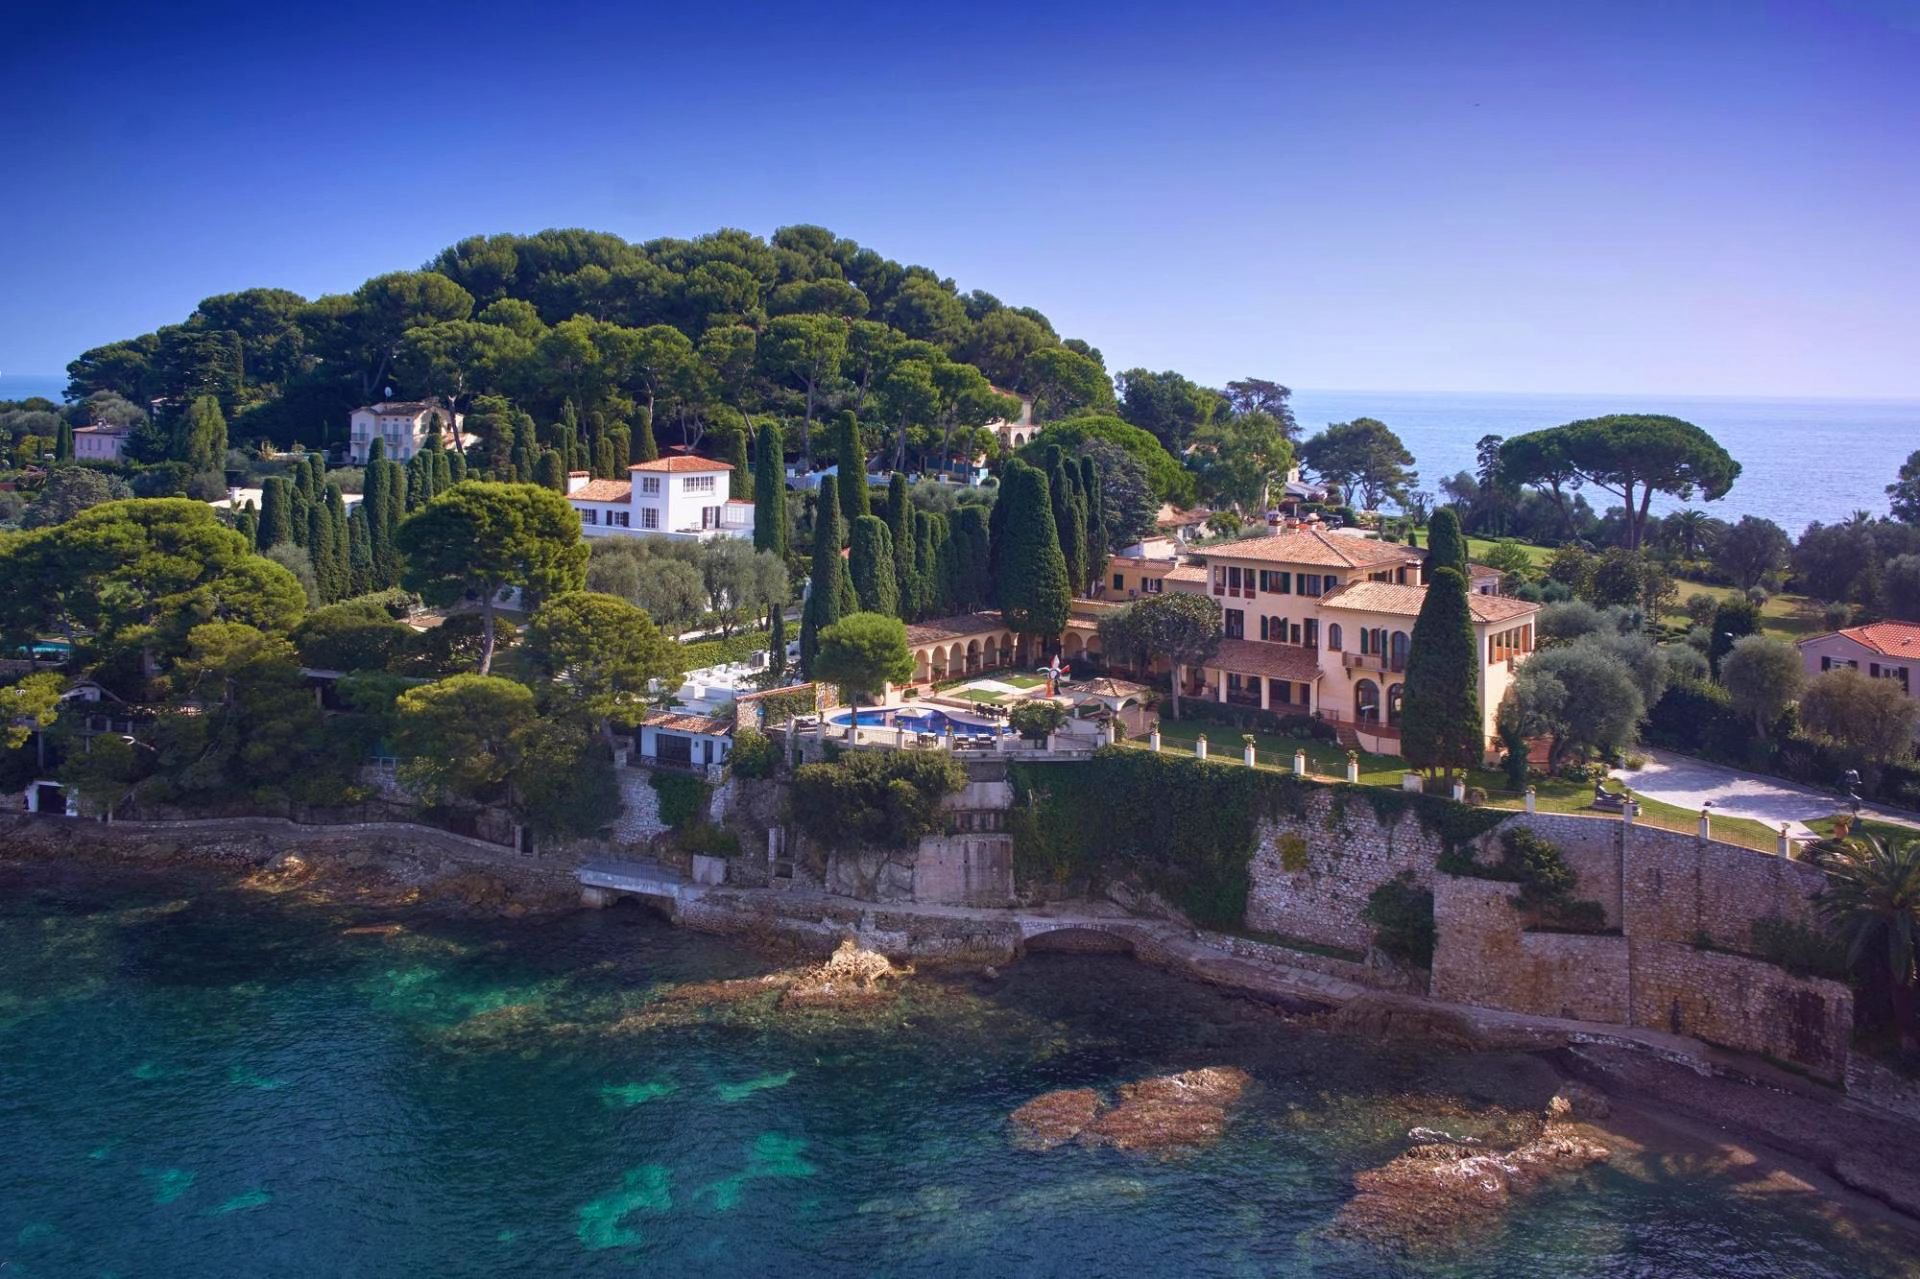 A photo of a villa in Saint Jean Cap Ferrat on the Mediterranean Sea